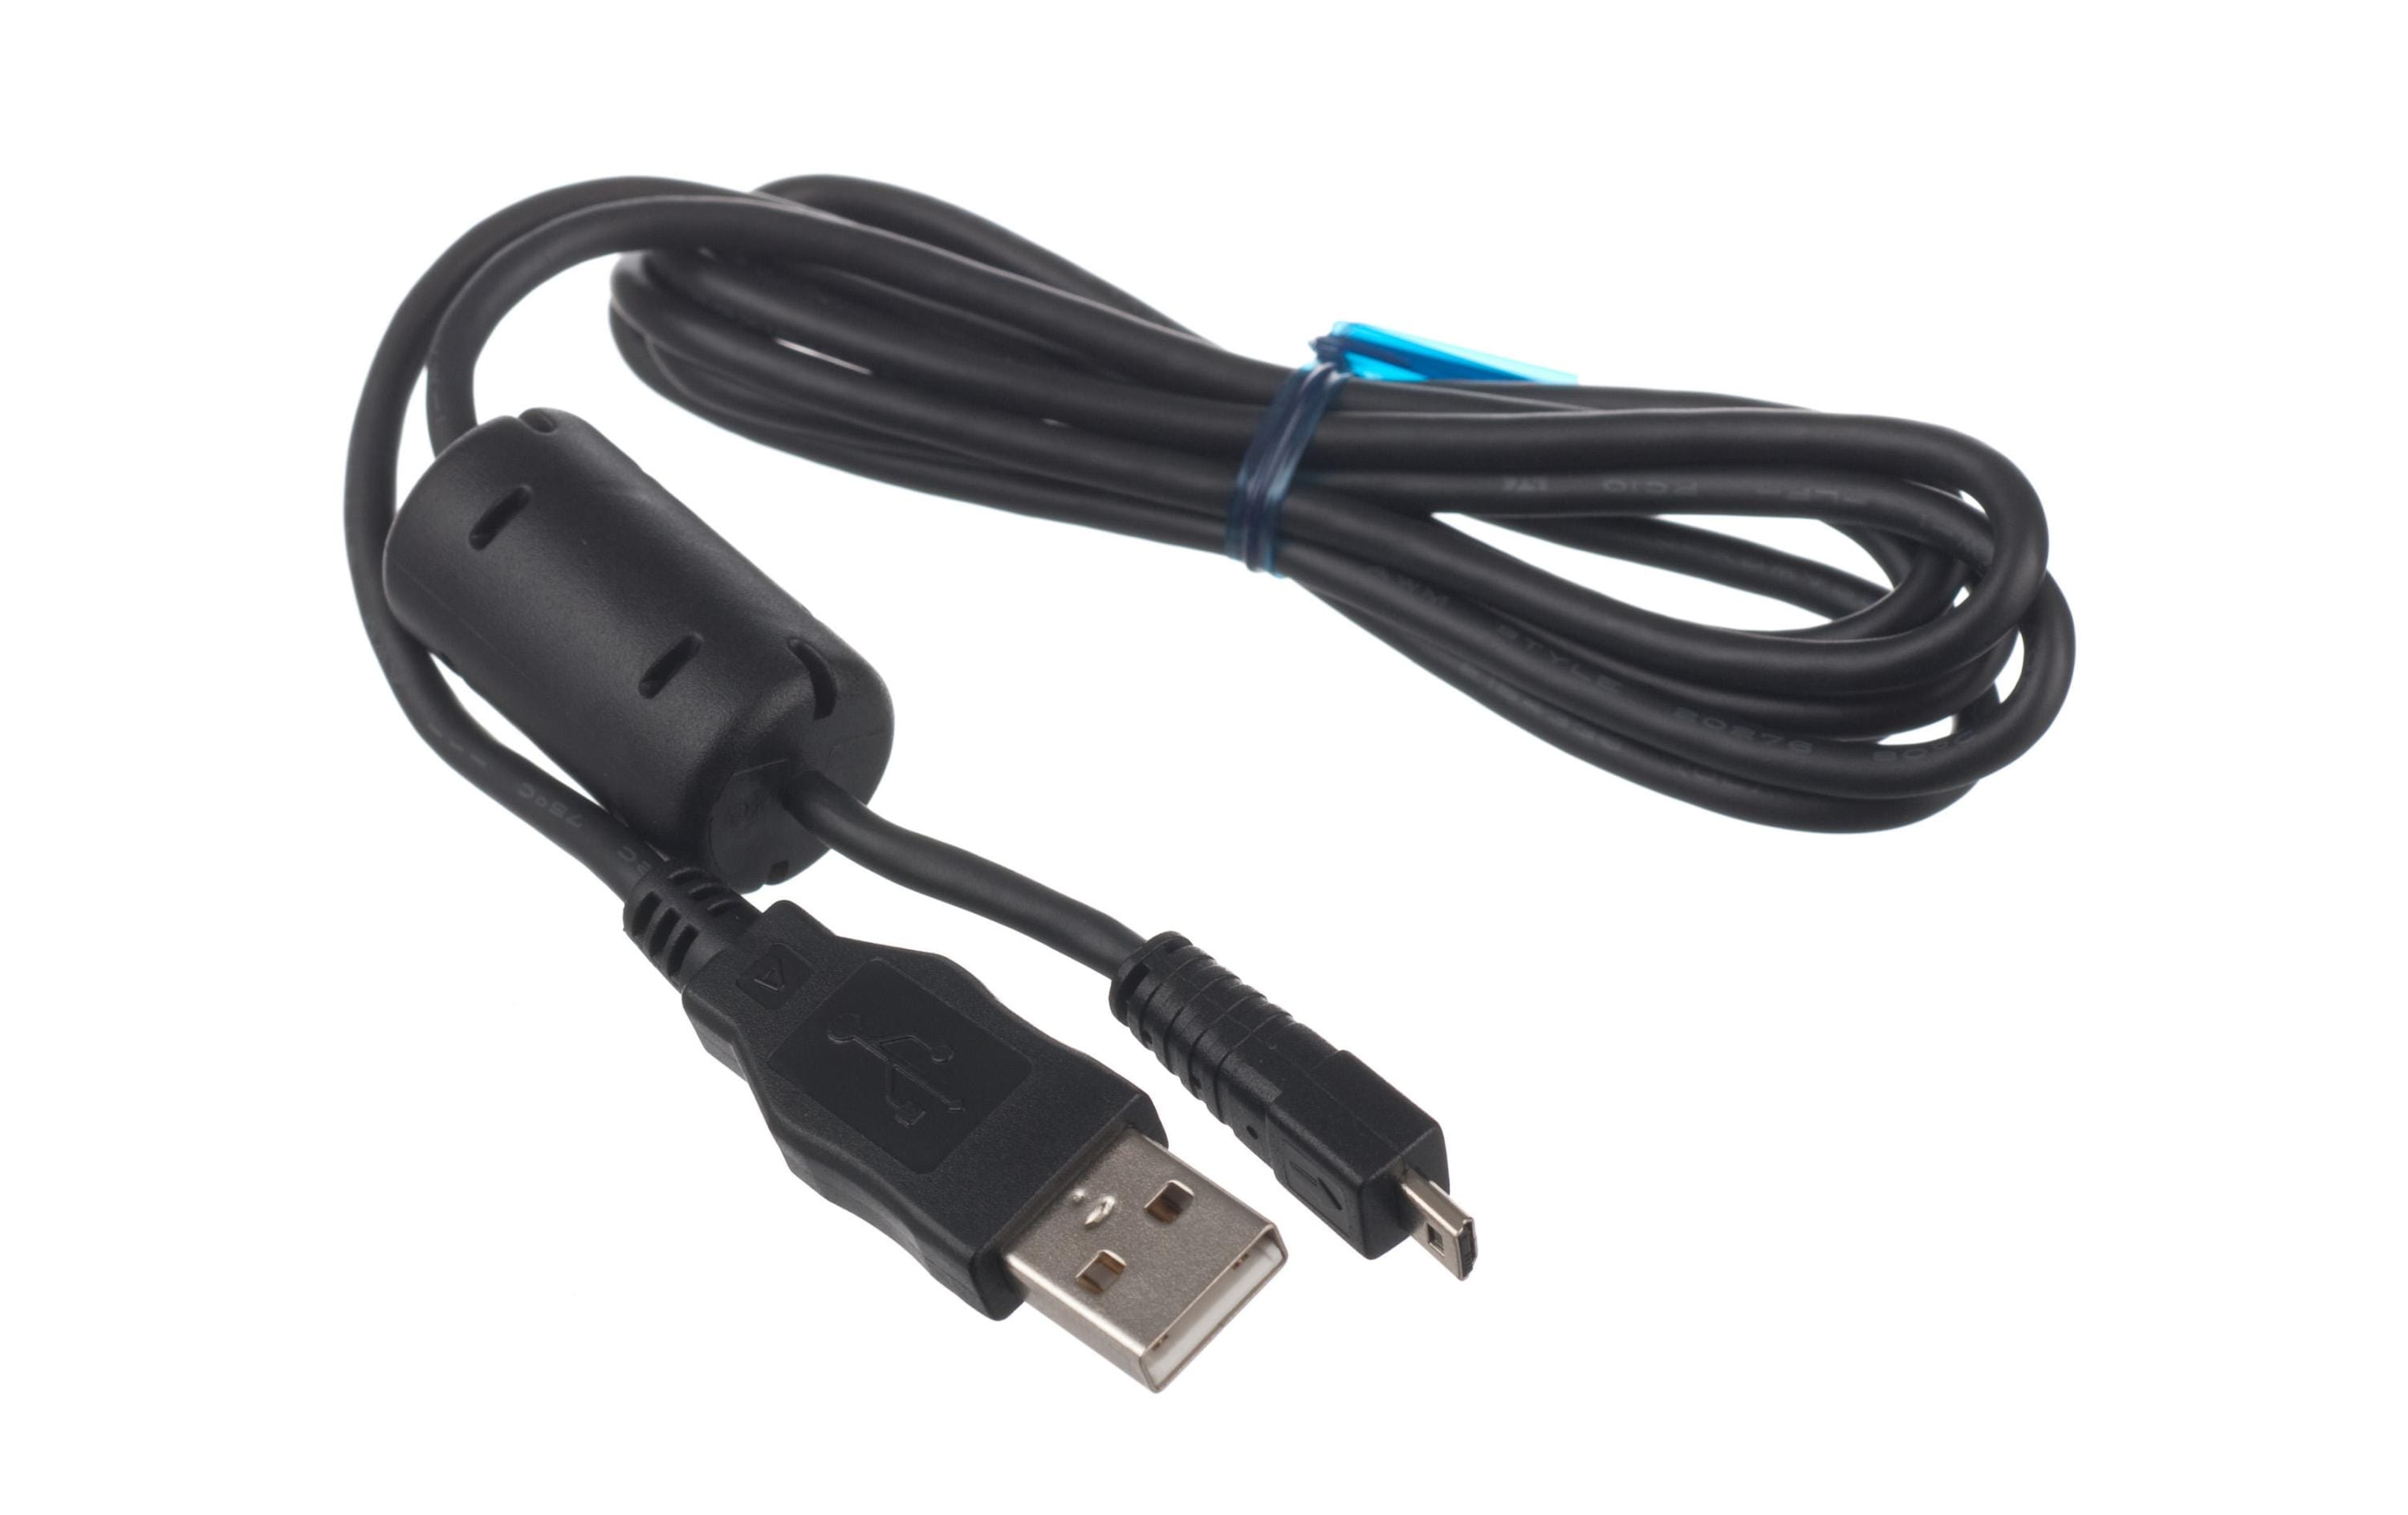 Pentax Kamera-Ersatzkabel USB I-USB7